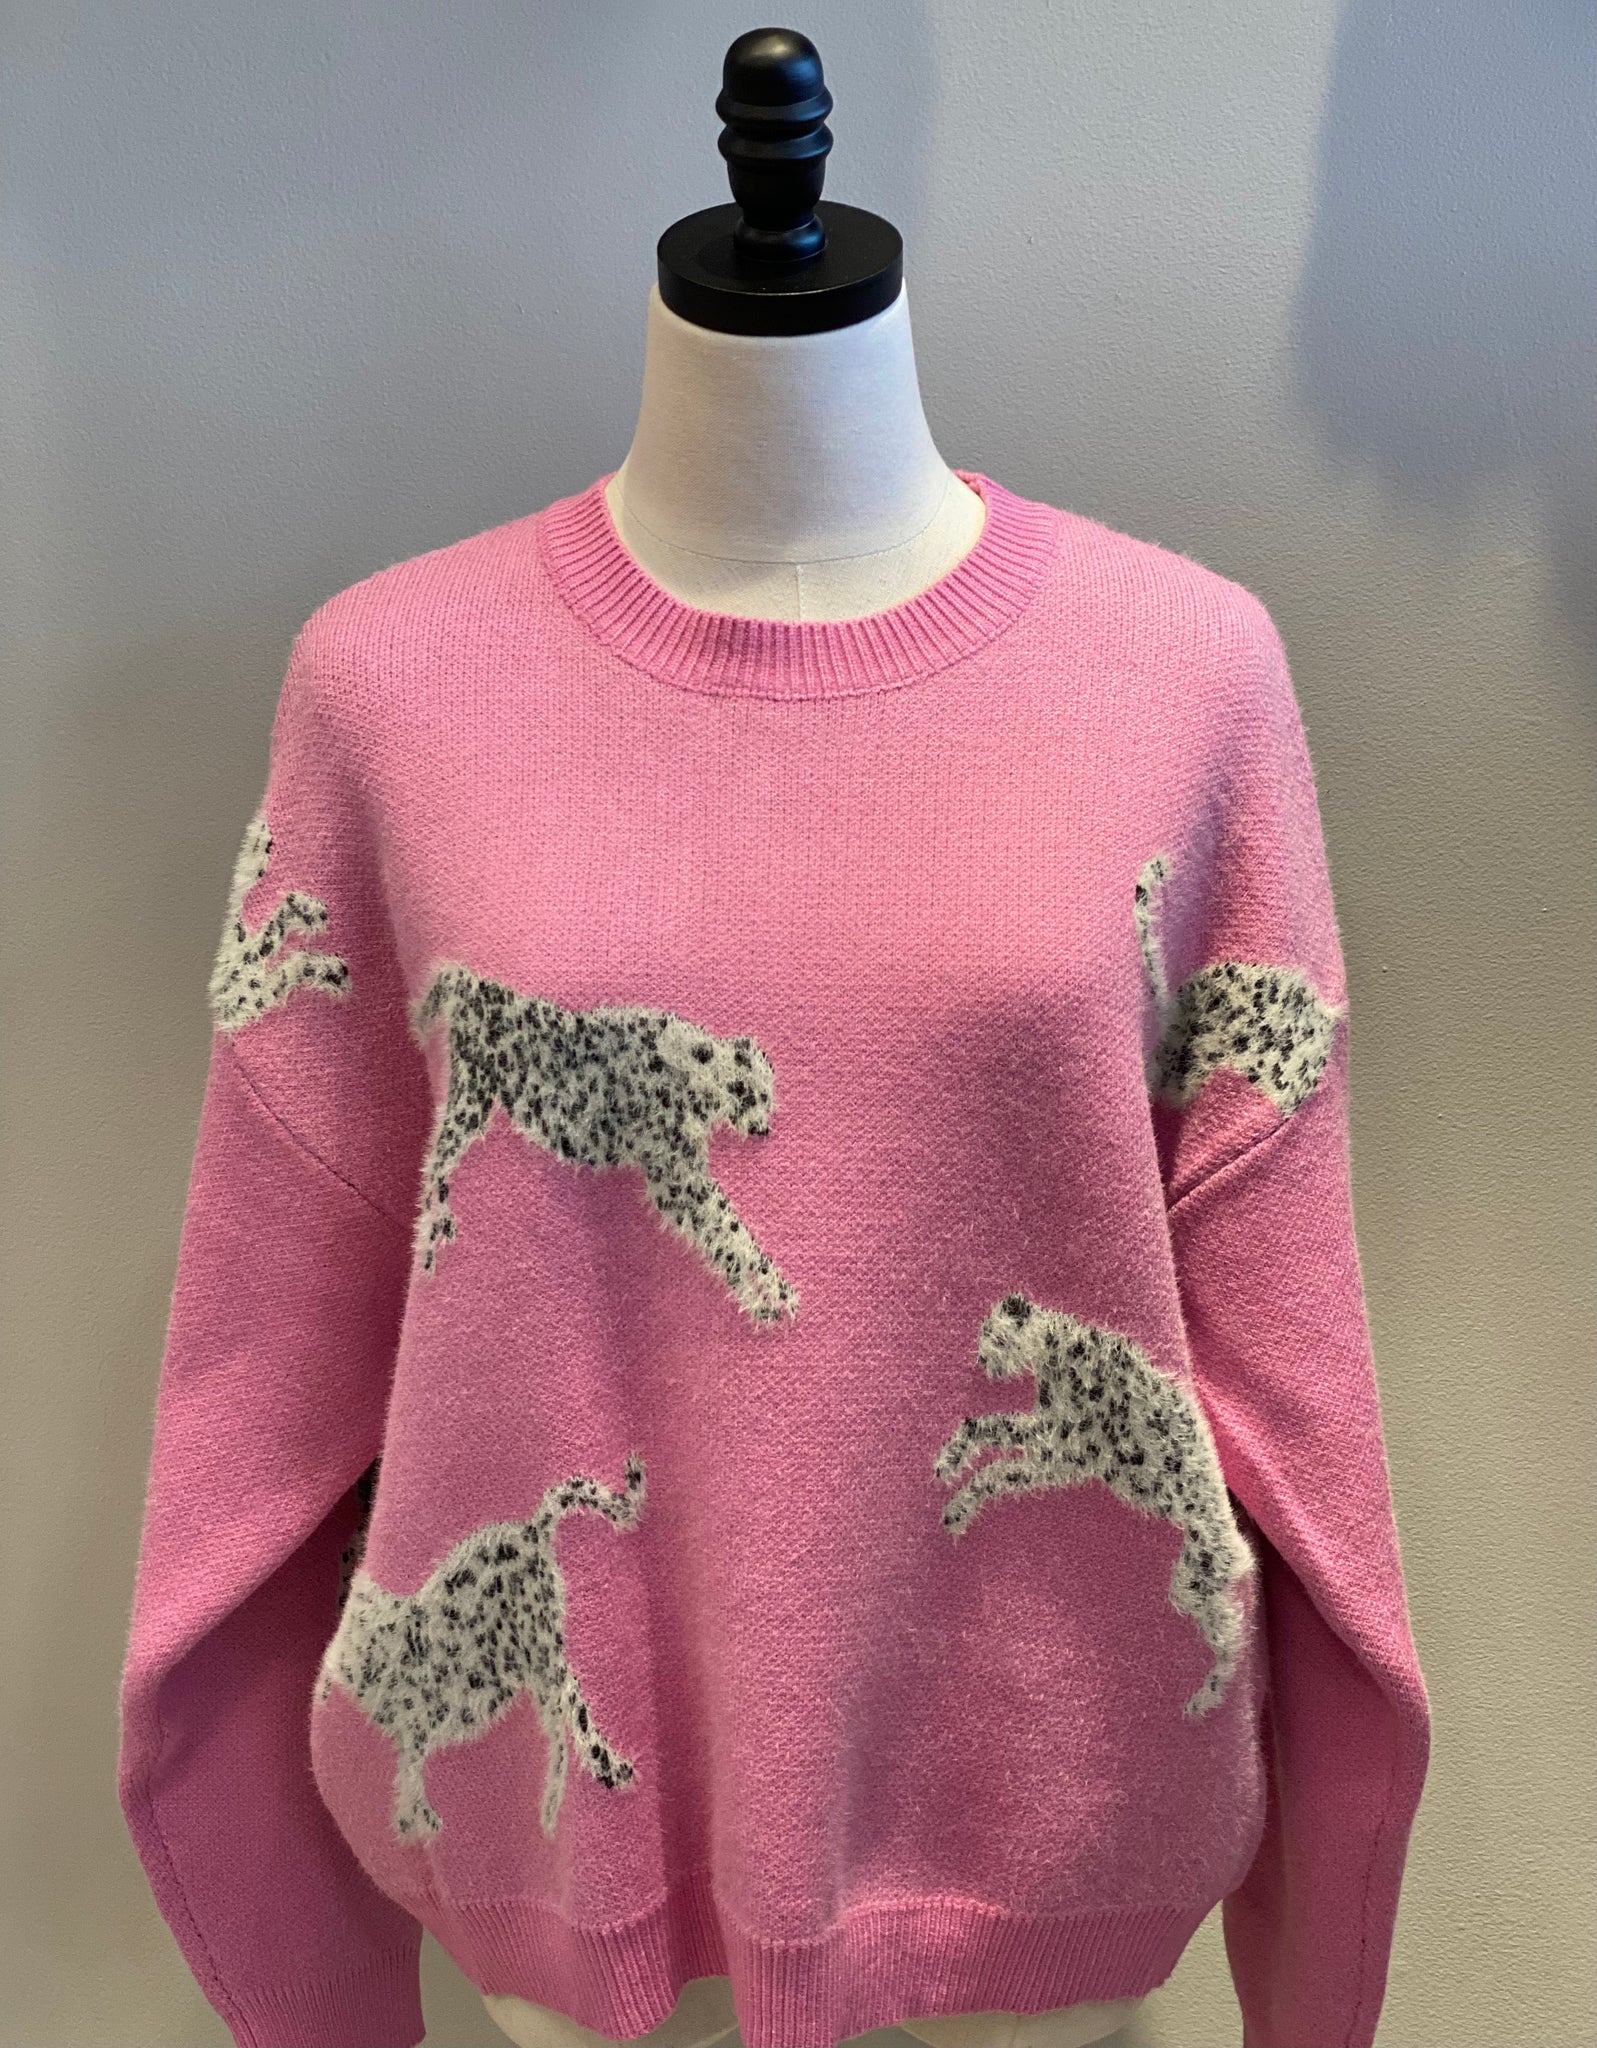 Don't Change Your Spots Leopard Sweater